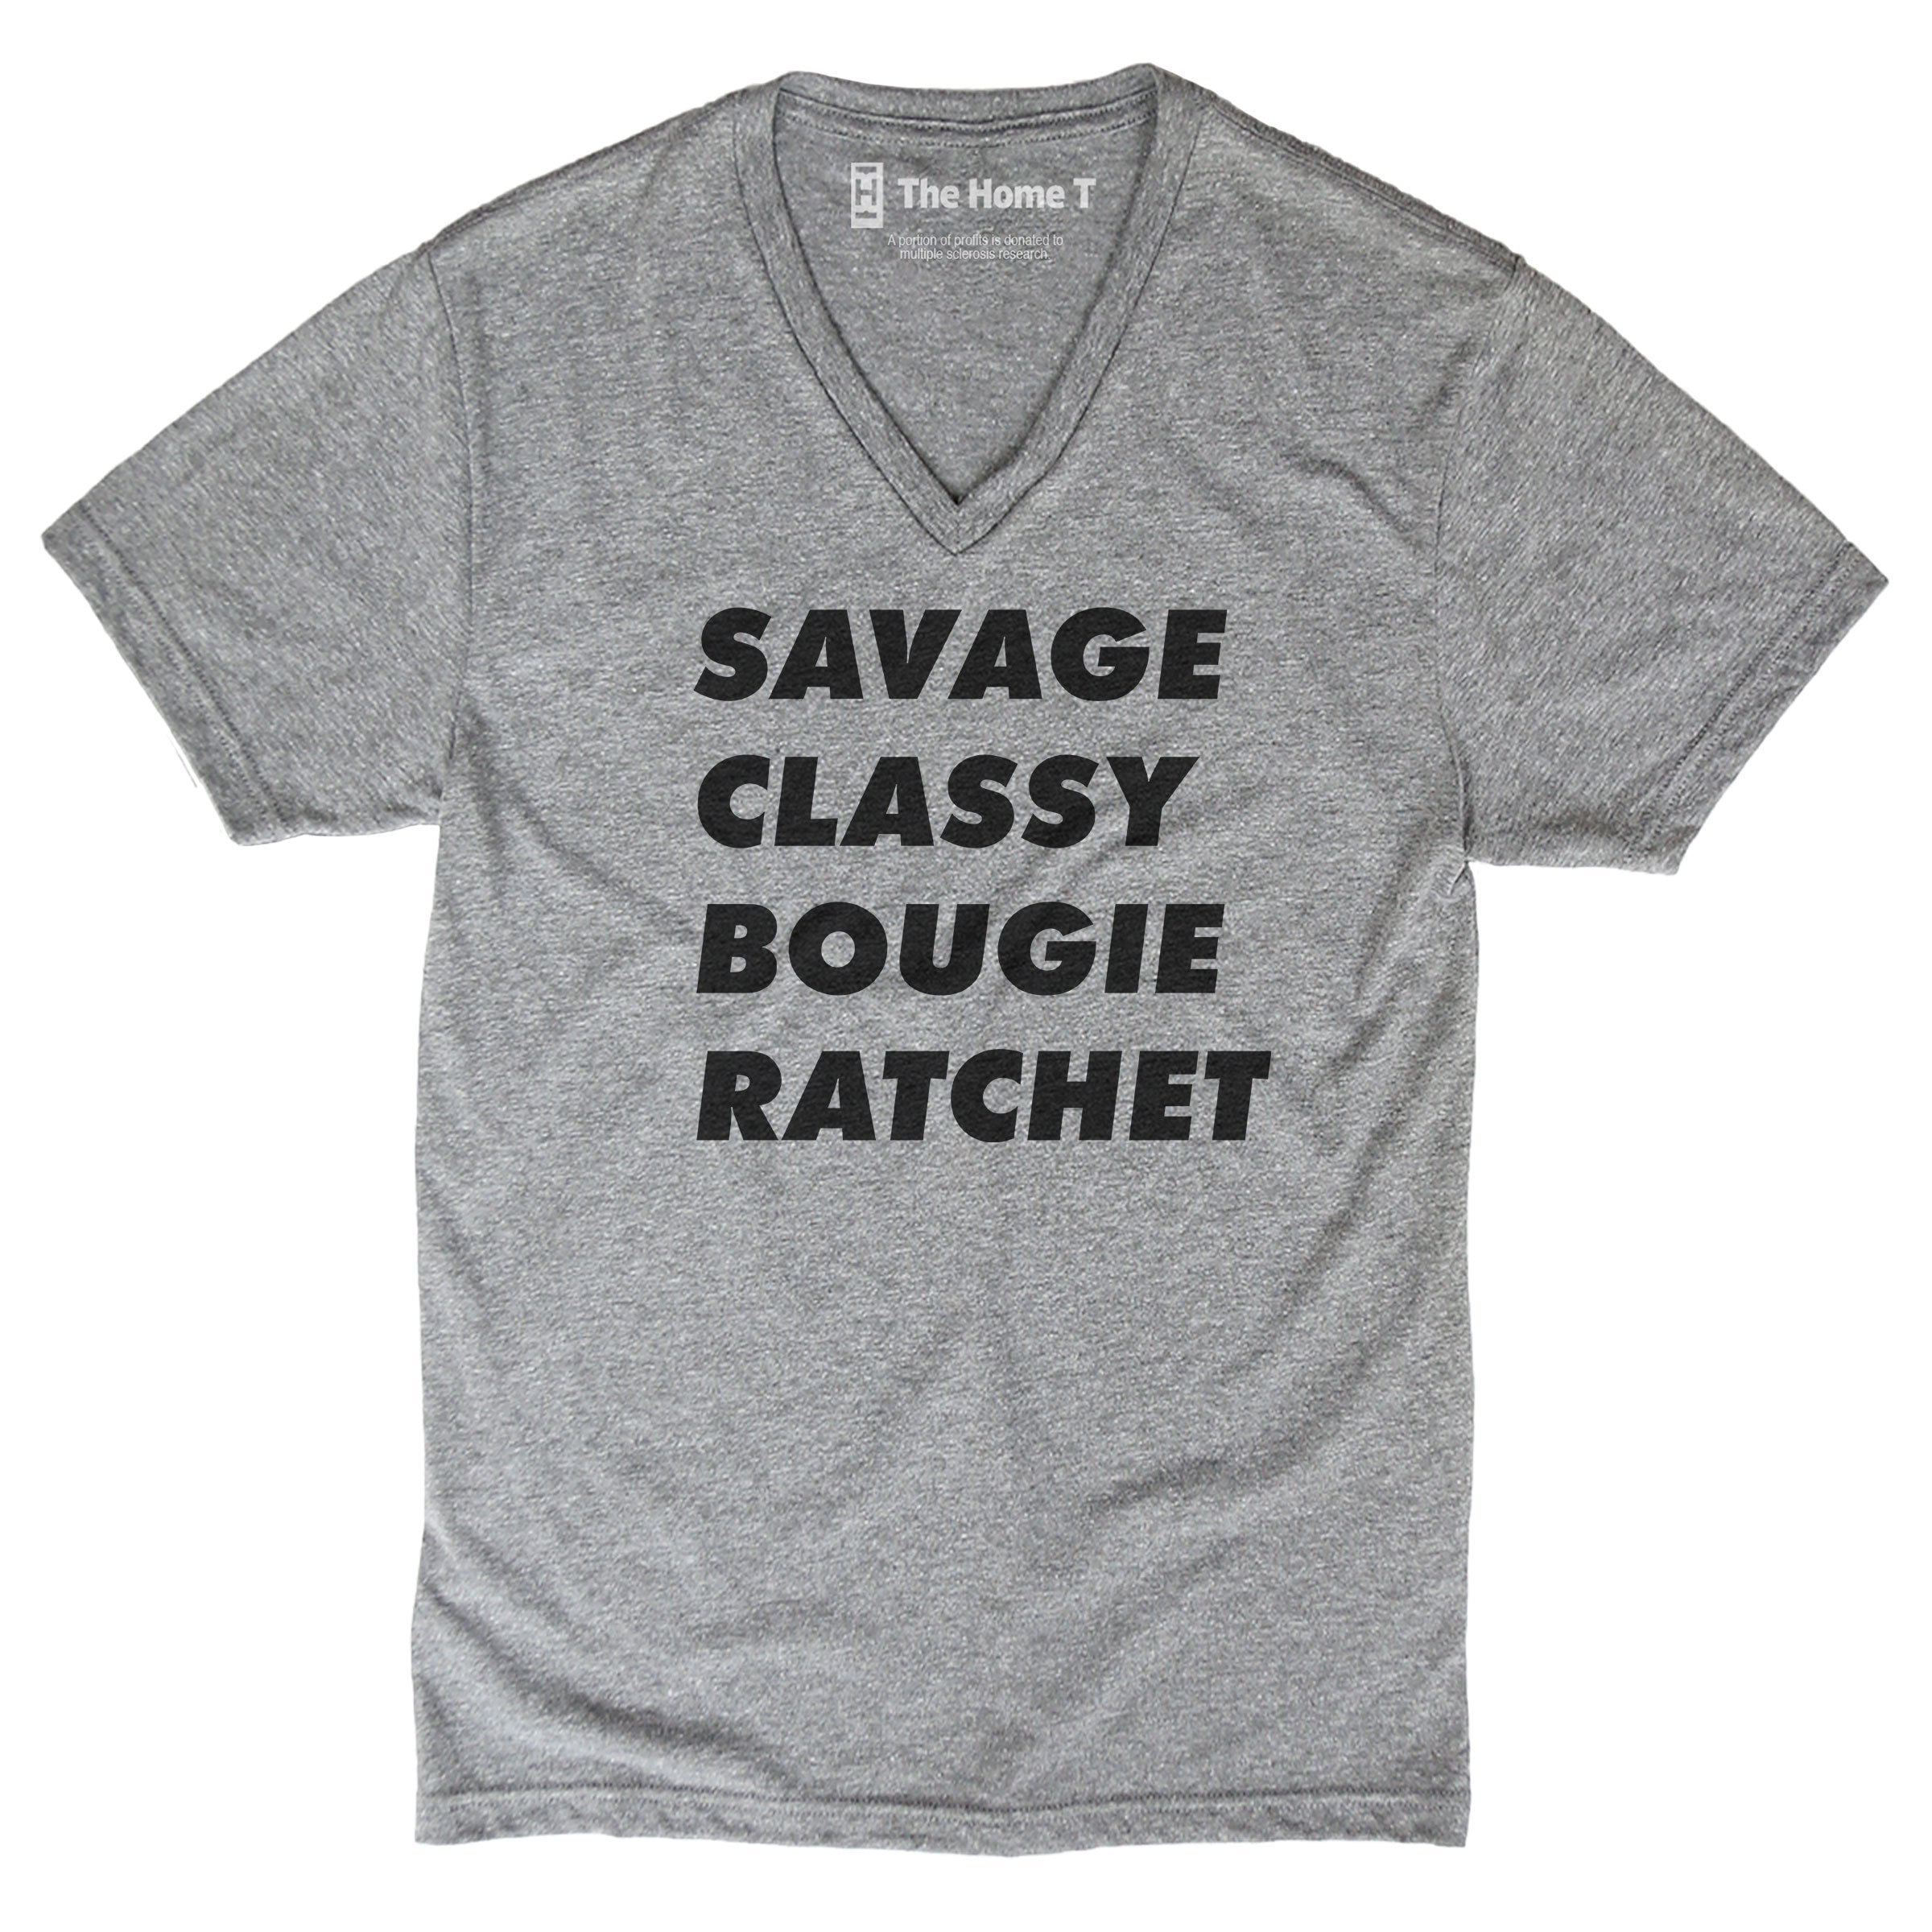 Savage Classy Bougie Ratchet Crew neck The Home T